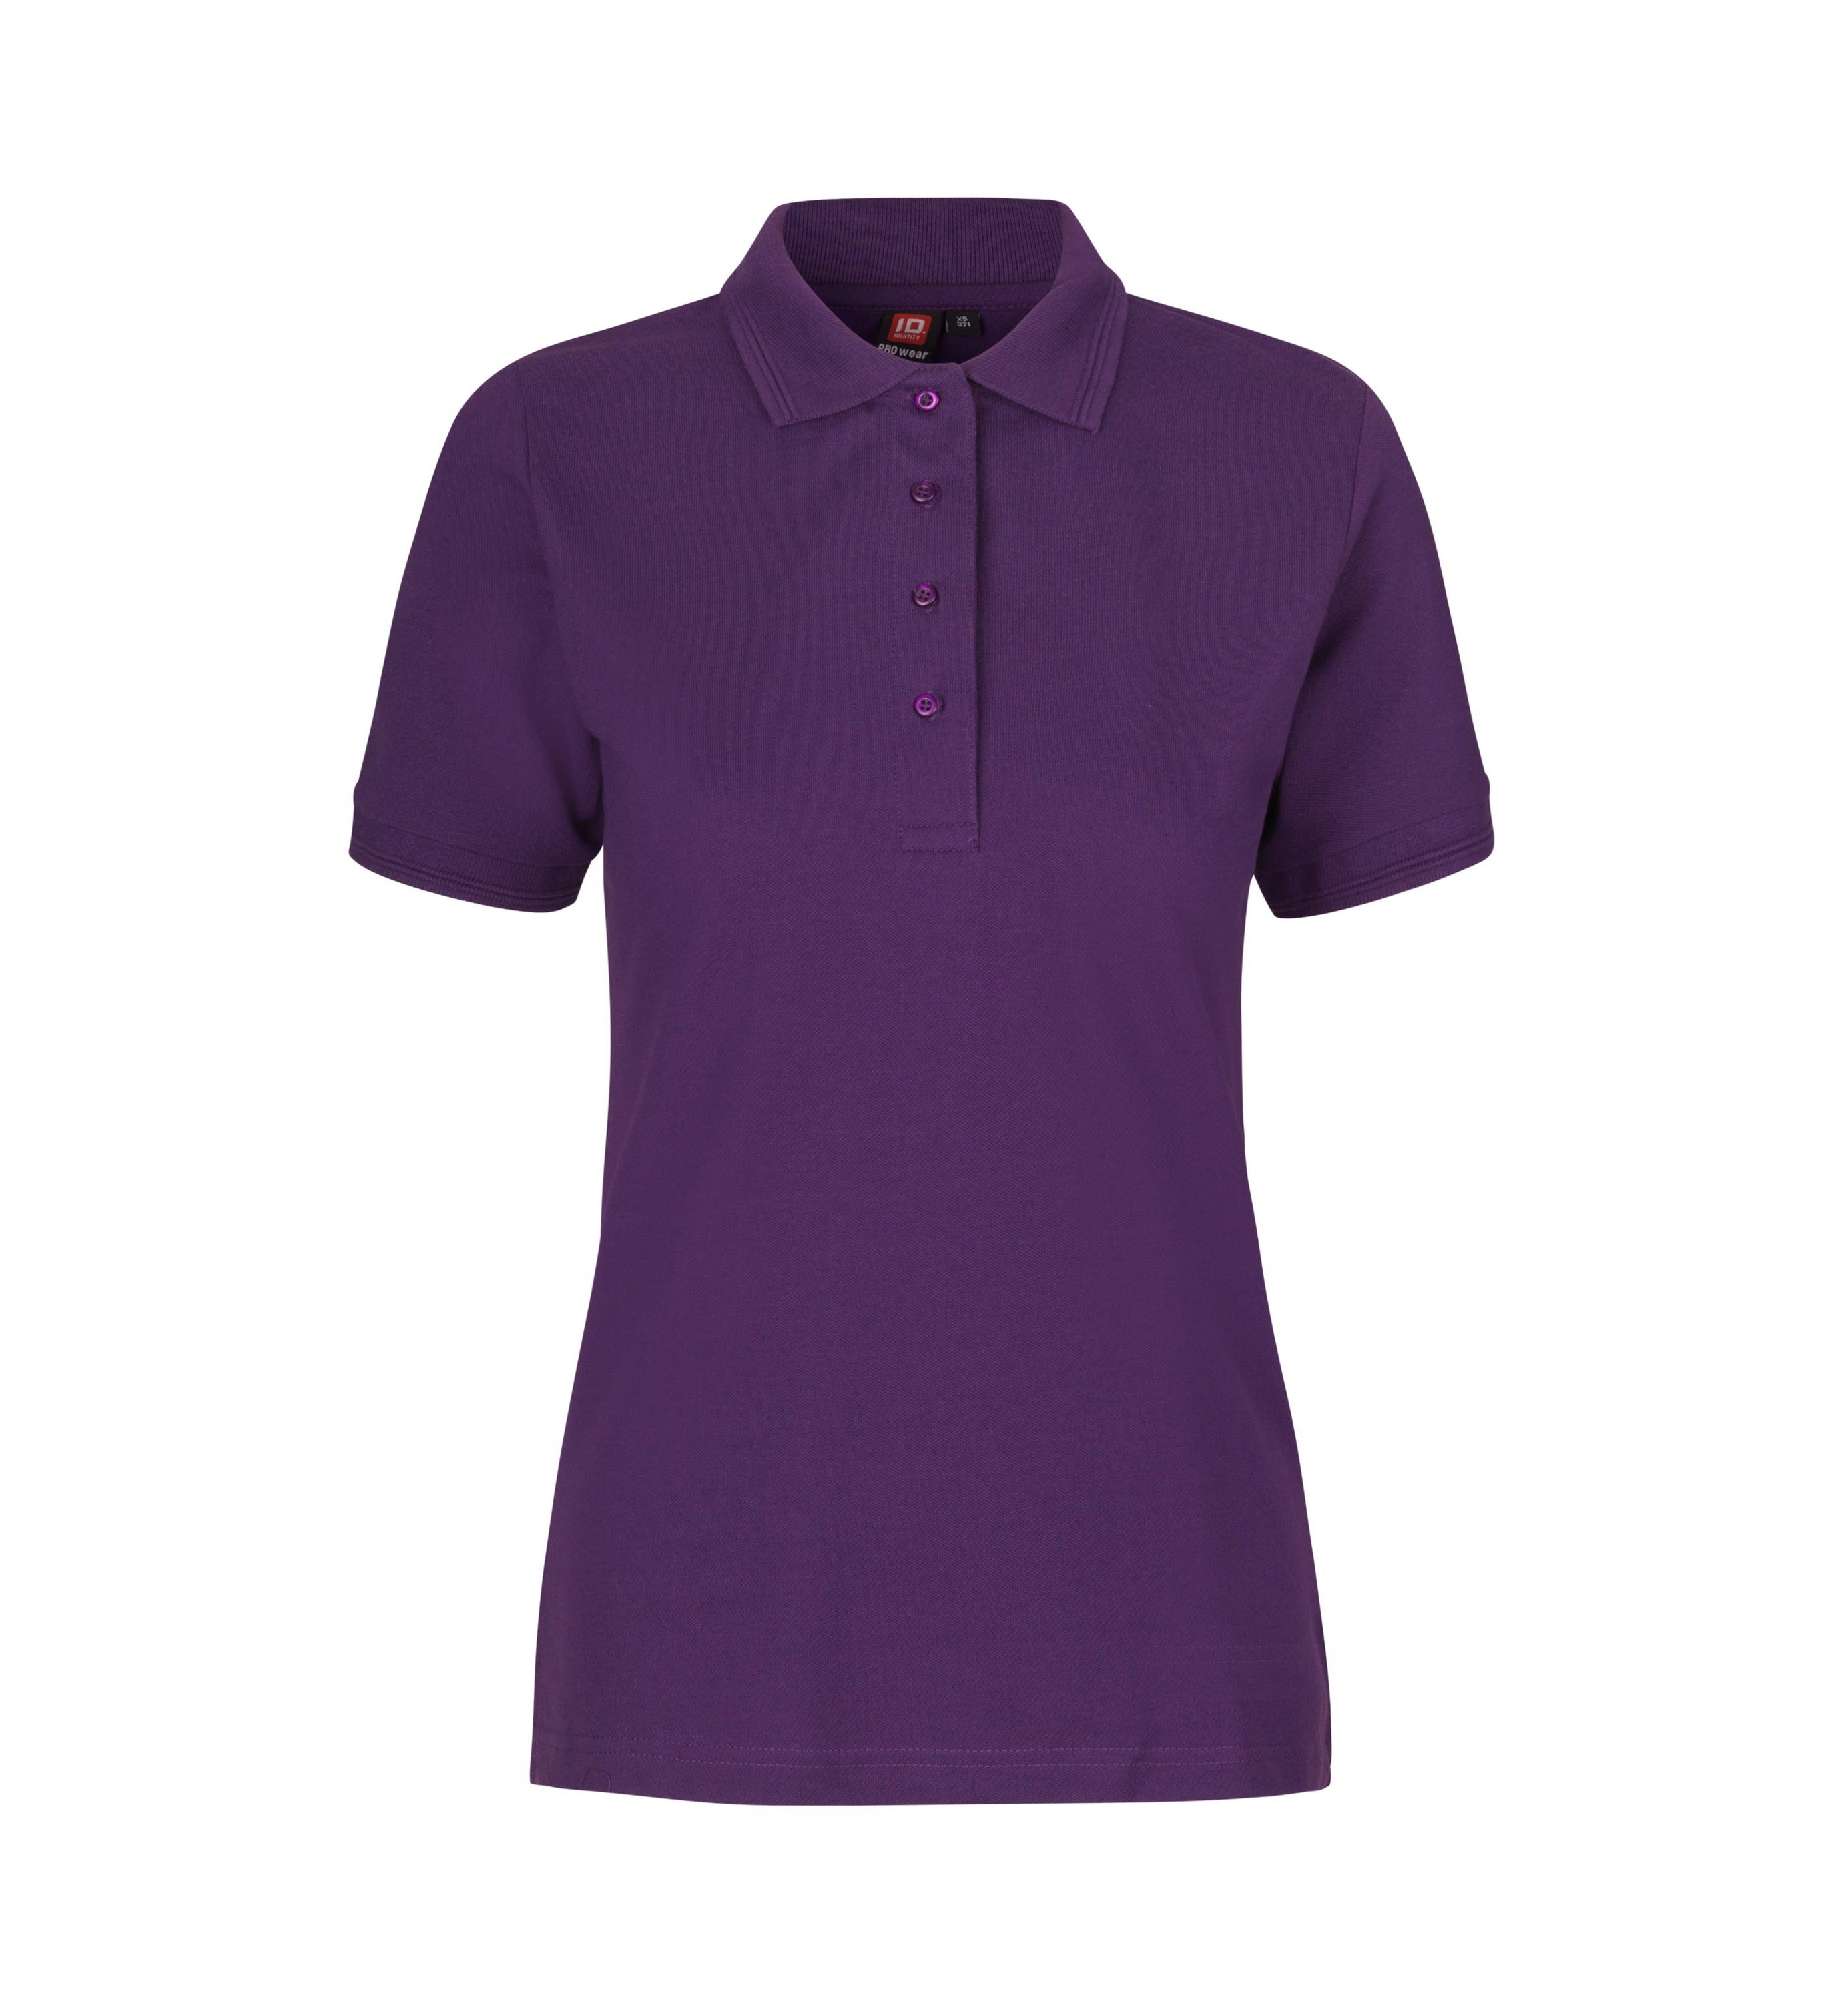 Поло PRO Wear by ID Polo Shirt klassisch, фиолетовый